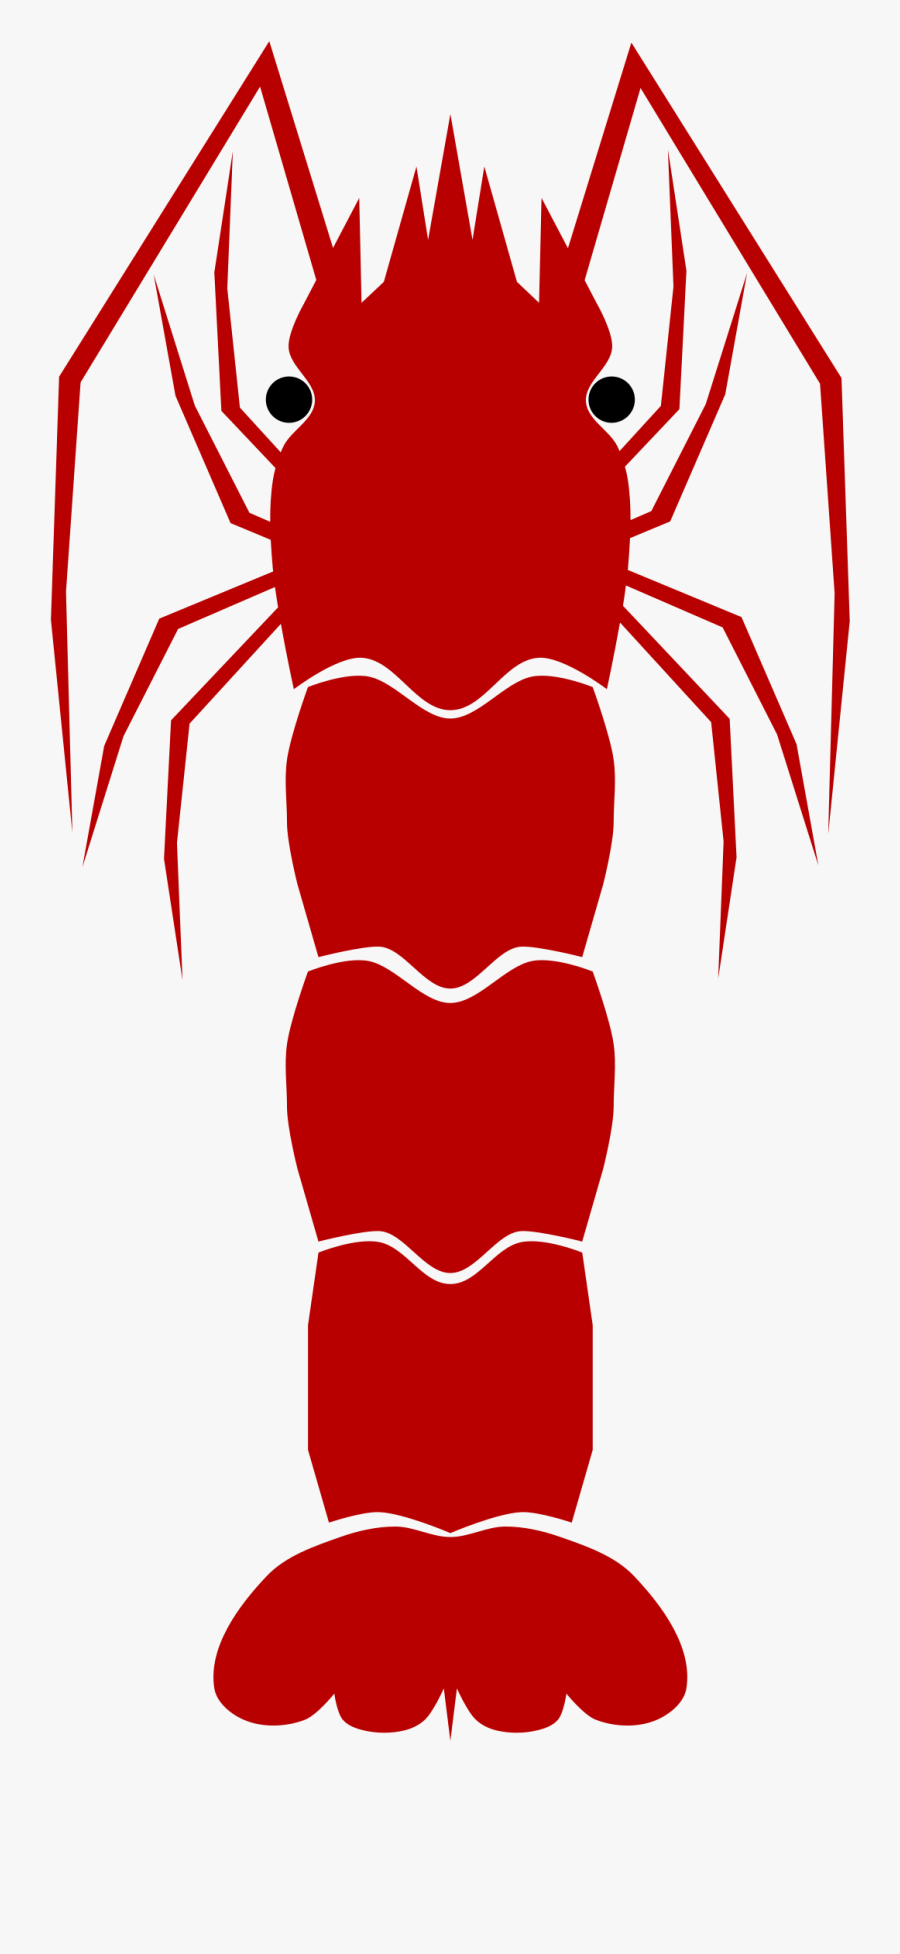 Shrimp - Shrimp Clipped Art, Transparent Clipart